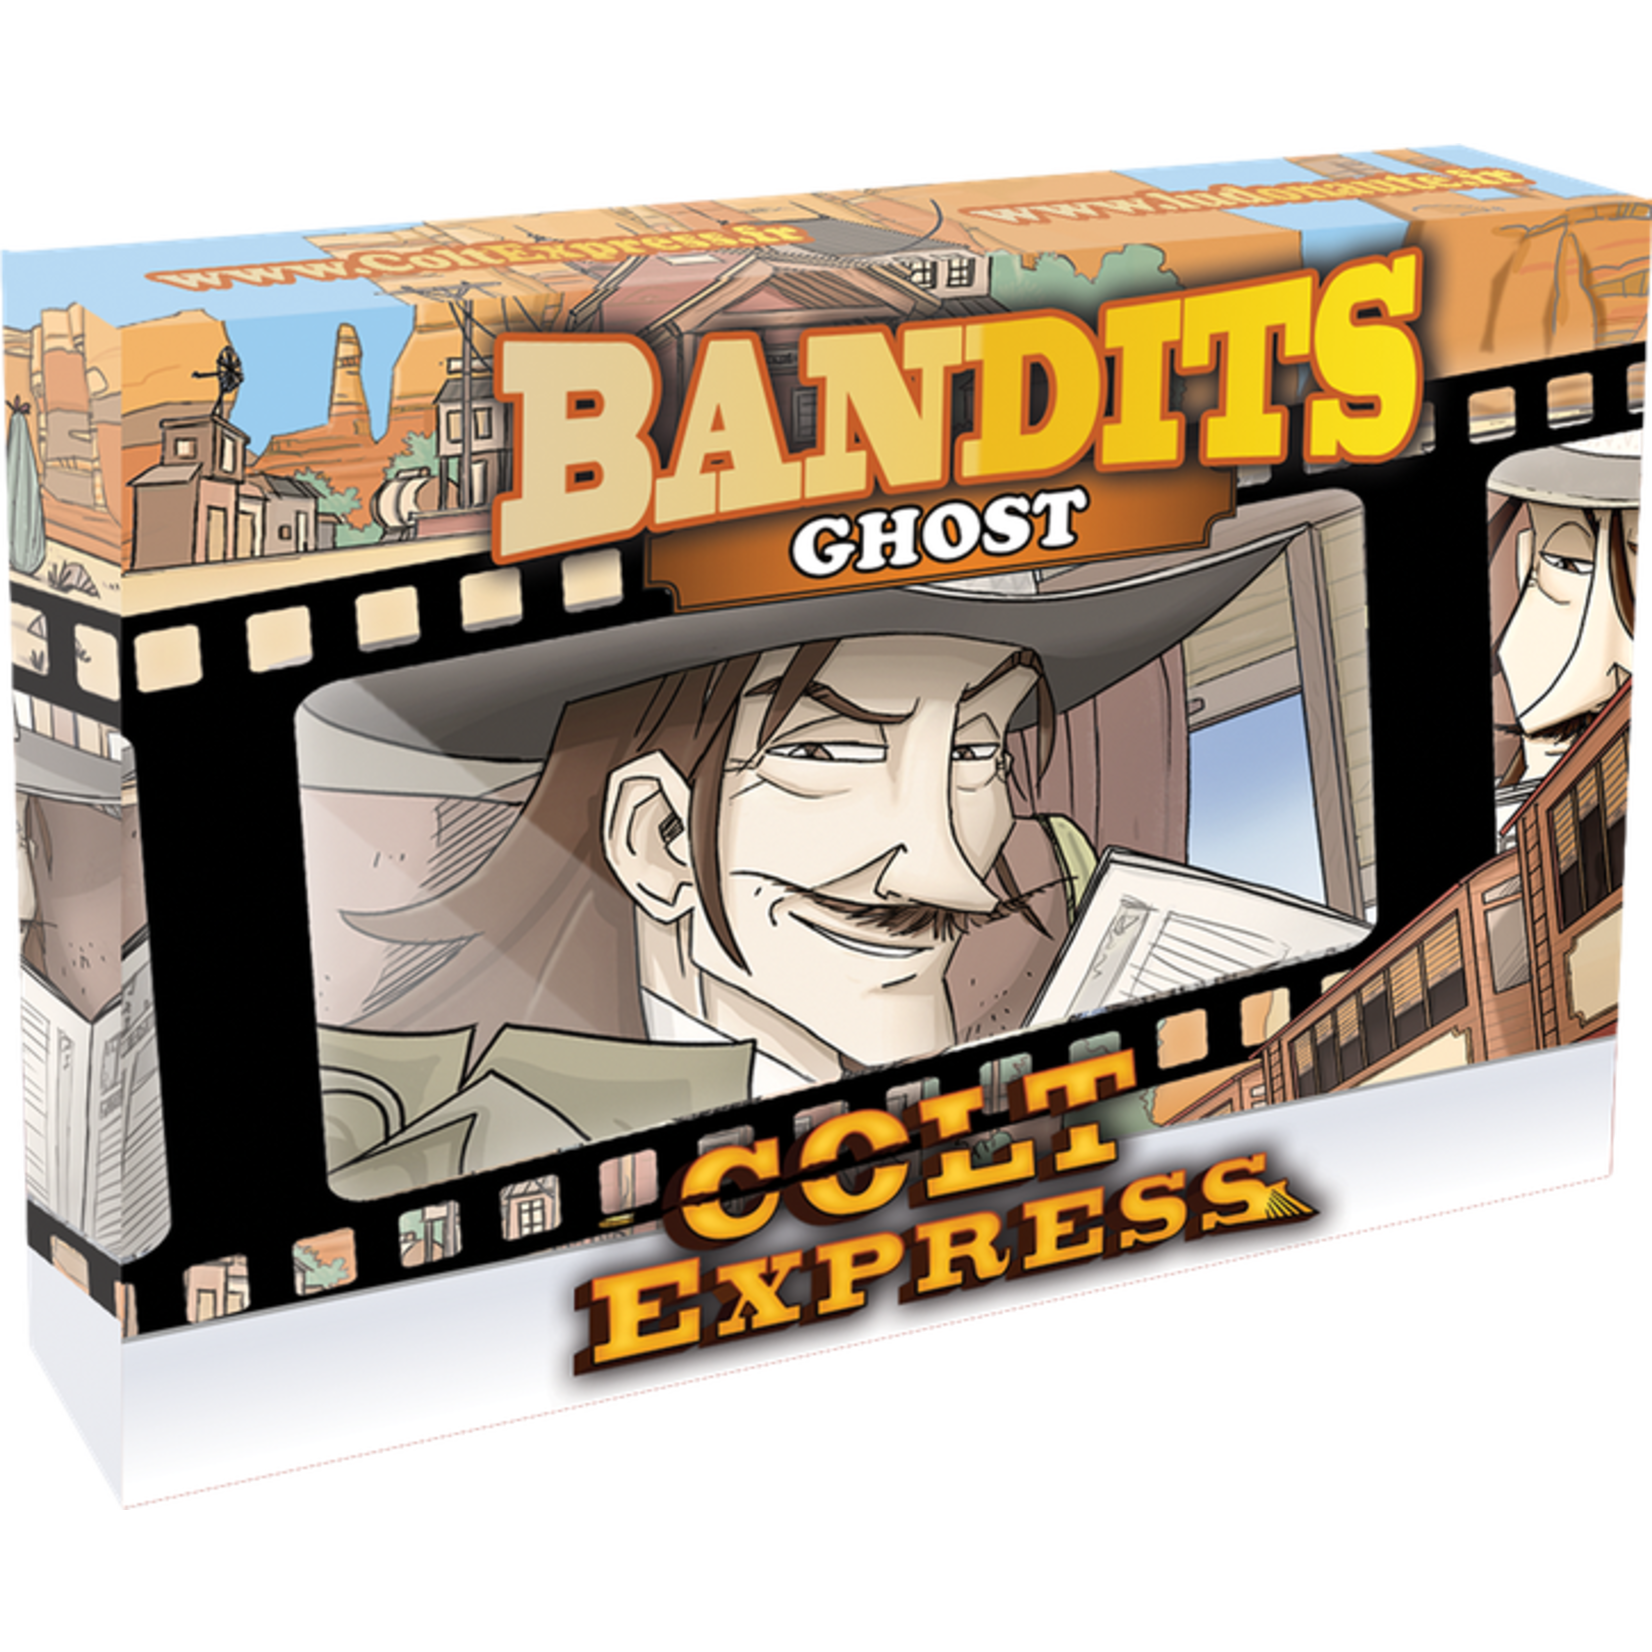 Ludonaute Colt Express Bandit- Ghost